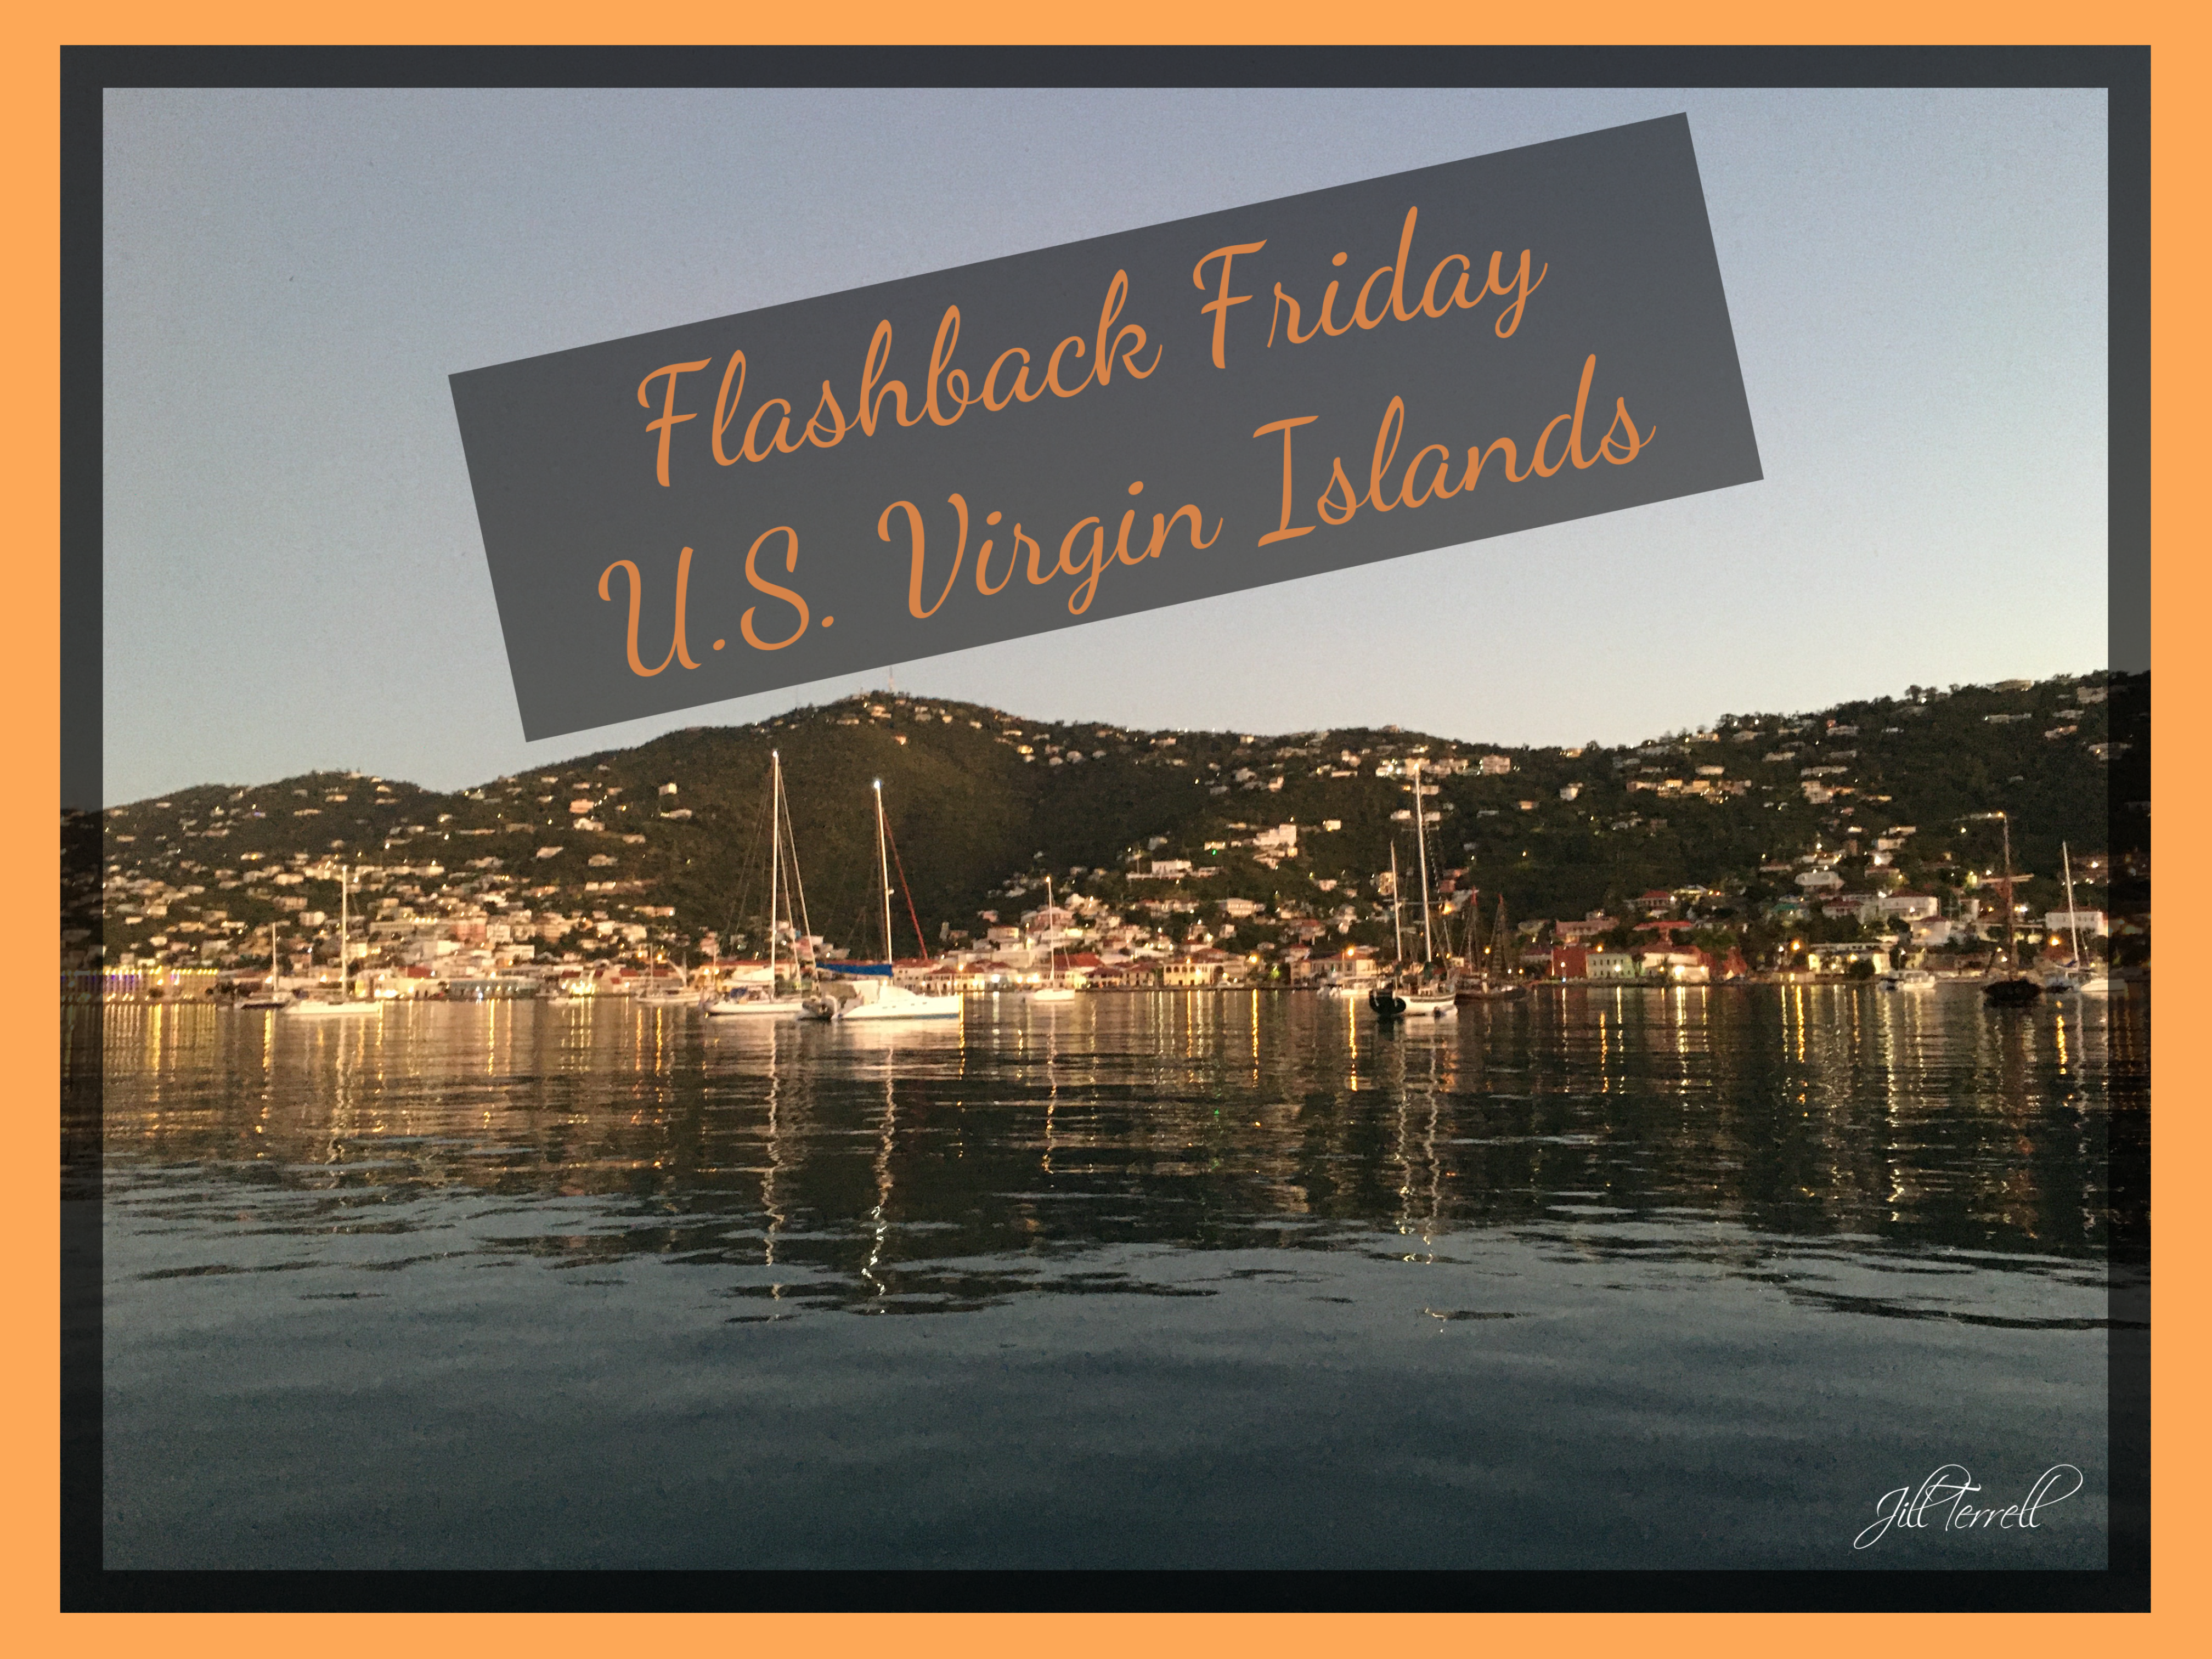 Flashback Friday The U.S. Virgin Islands